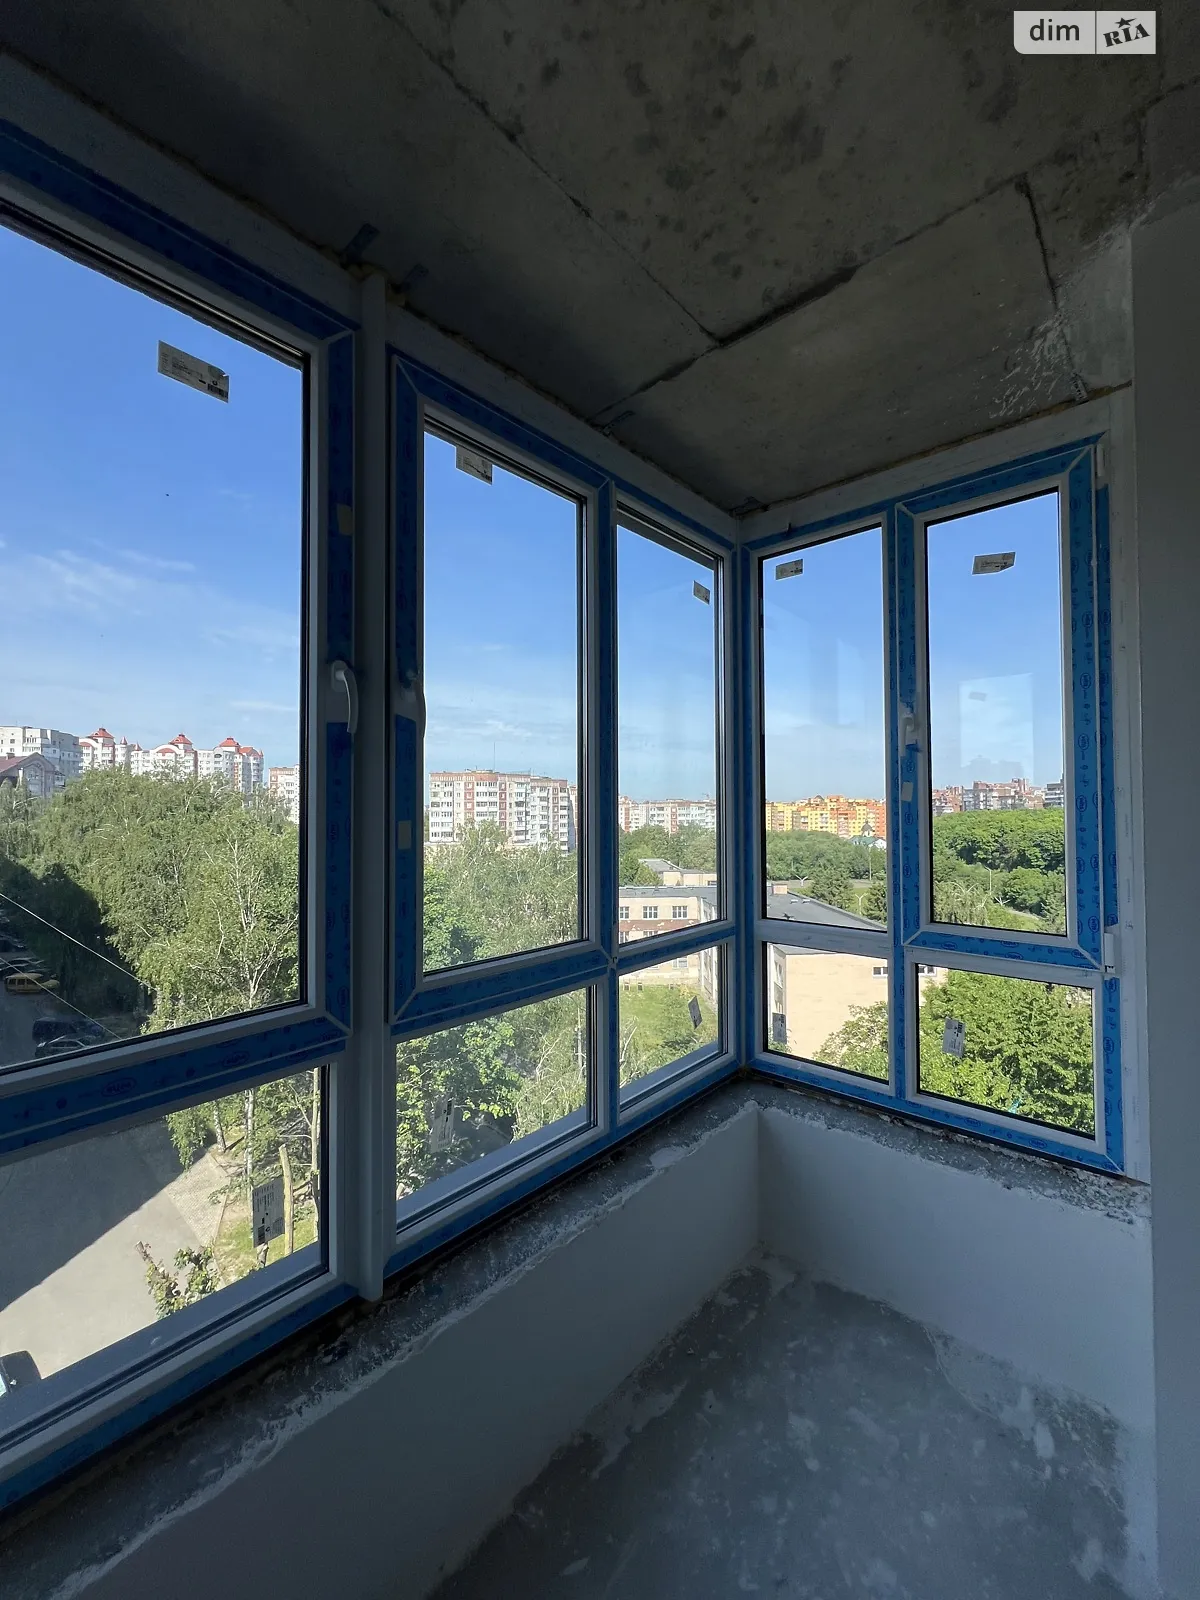 1-комнатная квартира 46.26 кв. м в Тернополе, ул. Вербицкого Михаила, 7 - фото 1